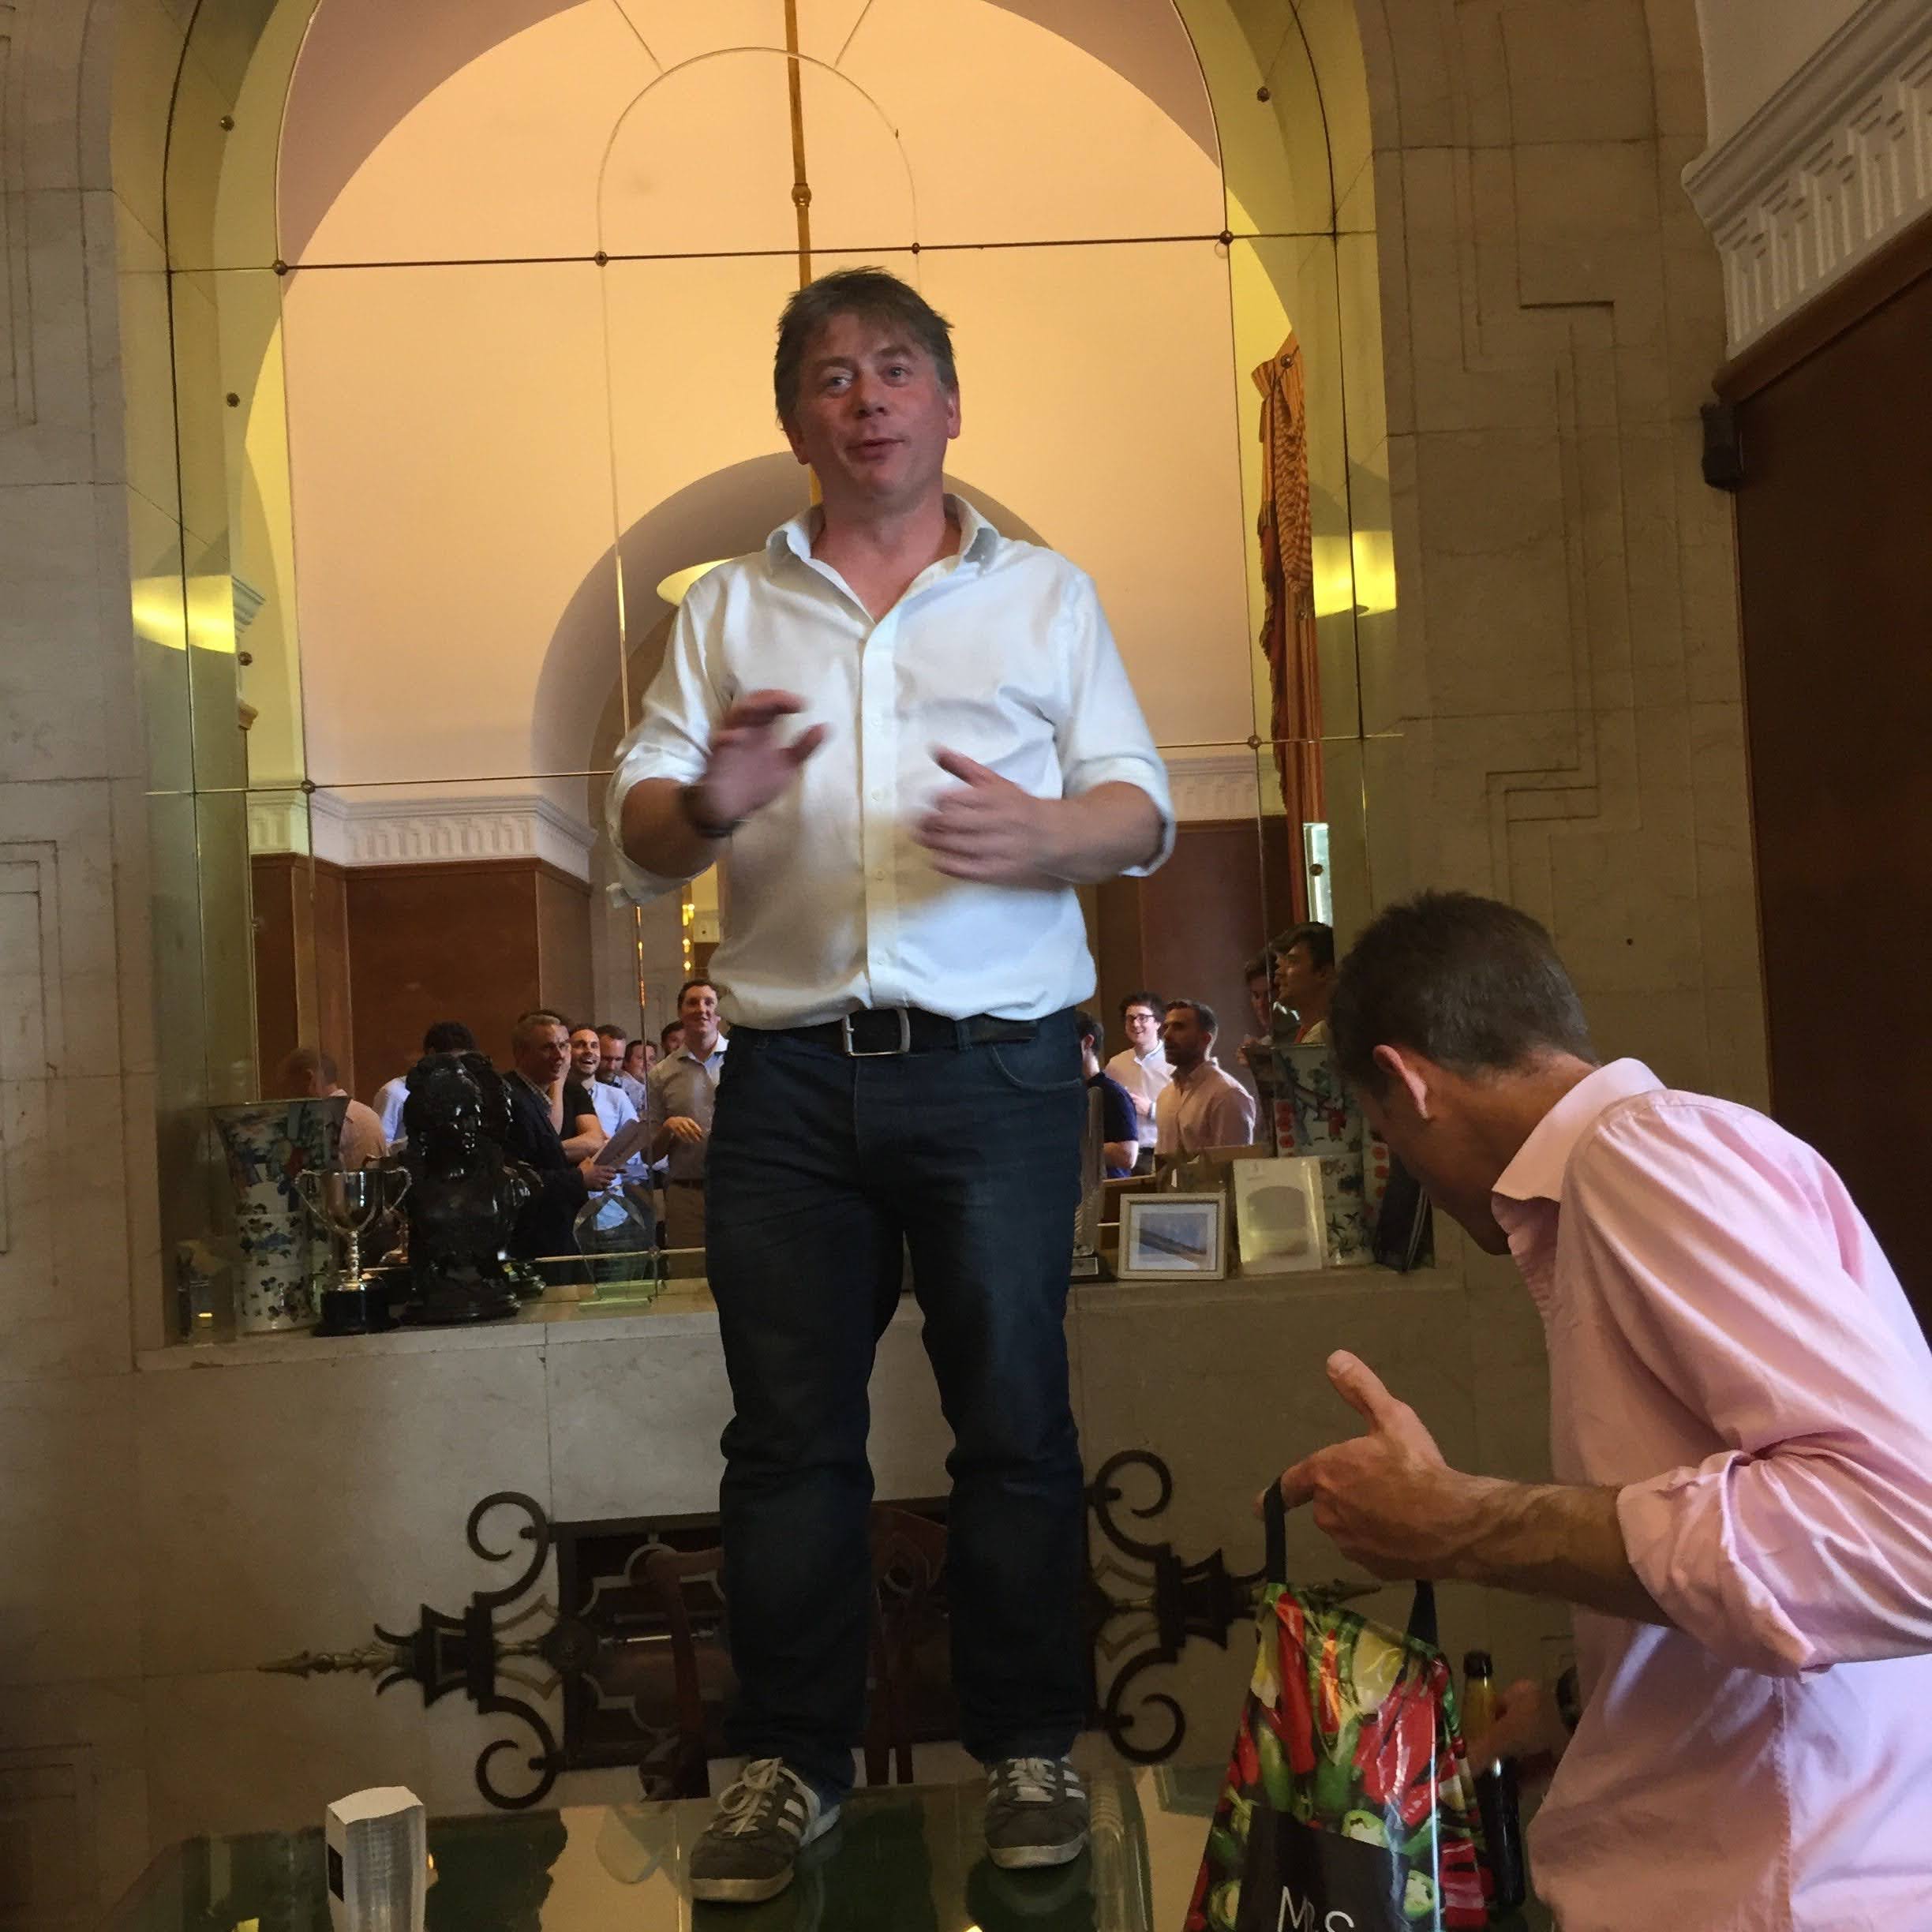 Greg giving a speech atop the Mayor of Hammersmith's desk